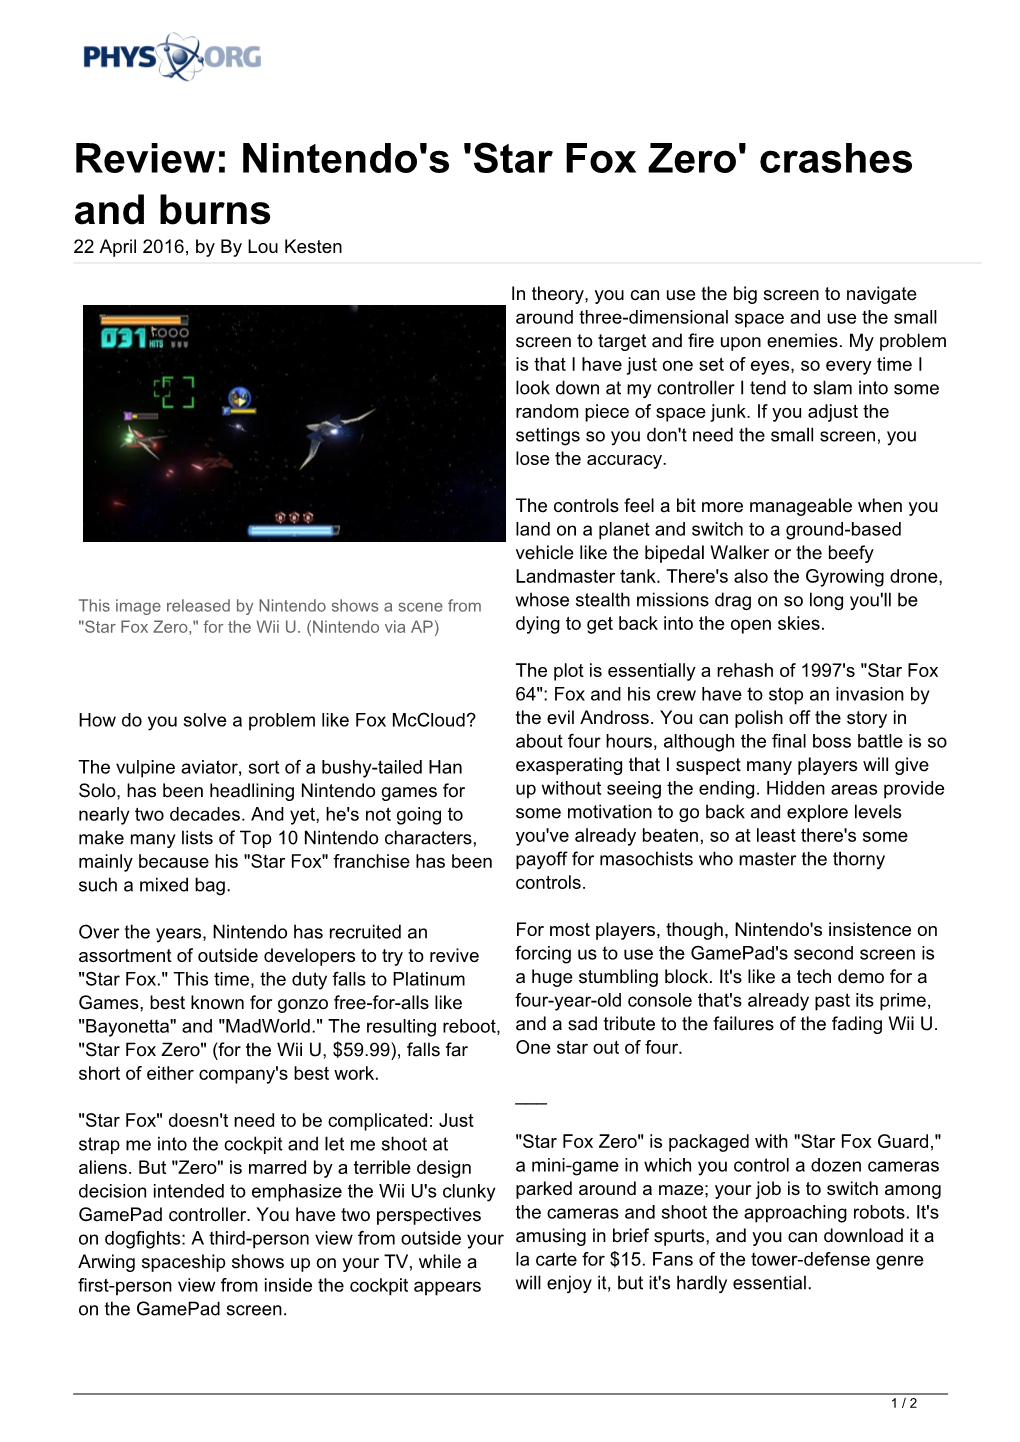 Nintendo's 'Star Fox Zero' Crashes and Burns 22 April 2016, by by Lou Kesten